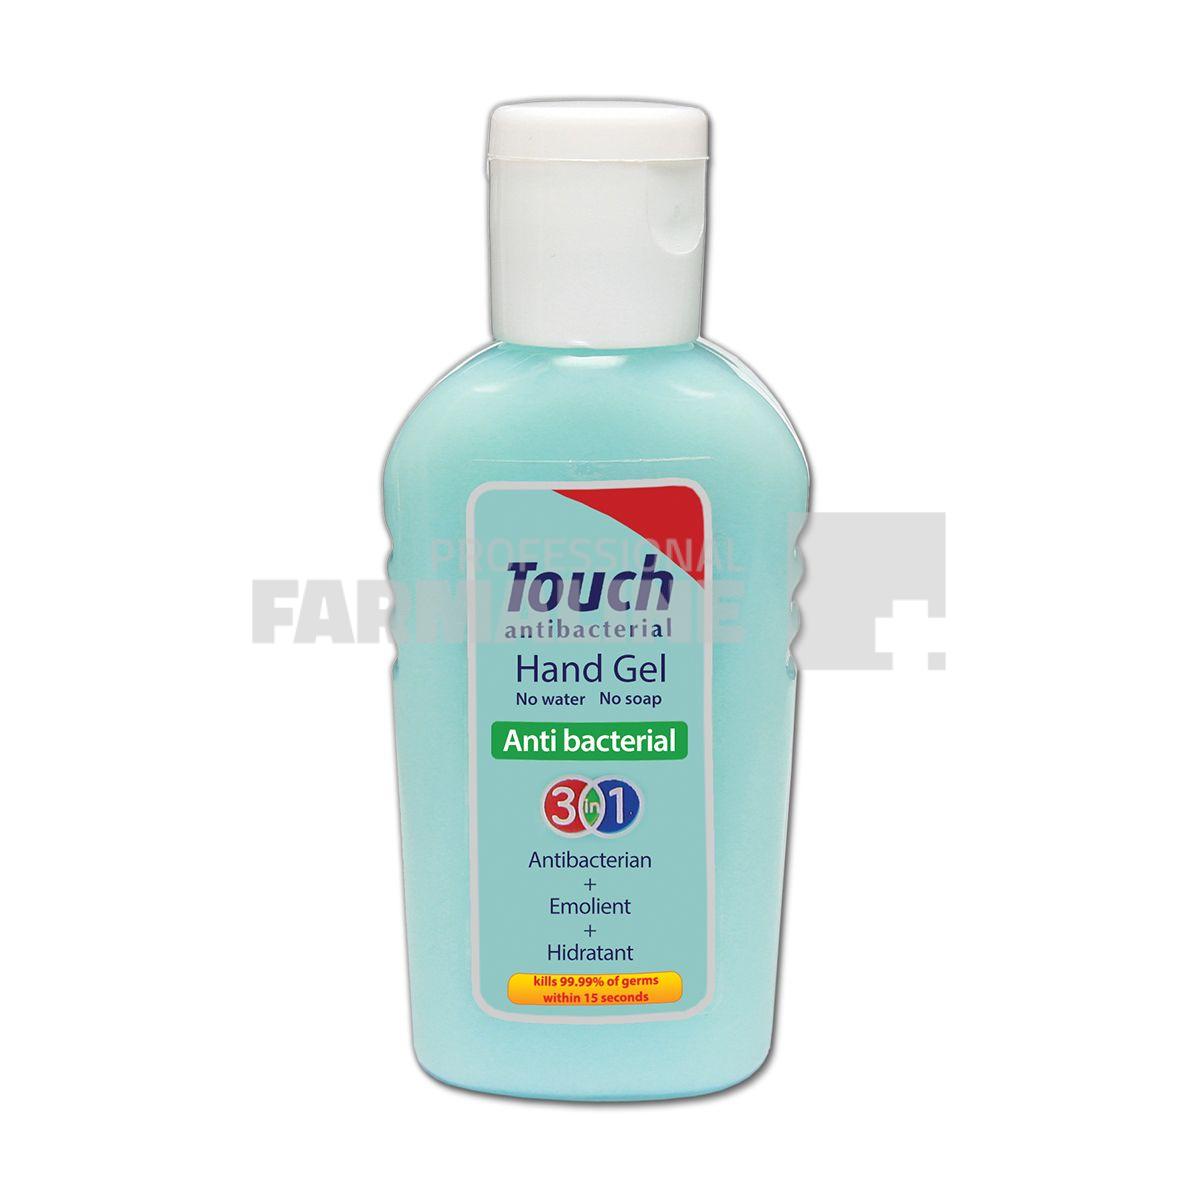 touch pk gel maini antibacterial 3 in 1 x 59ml ofe 179241 1 1592244694